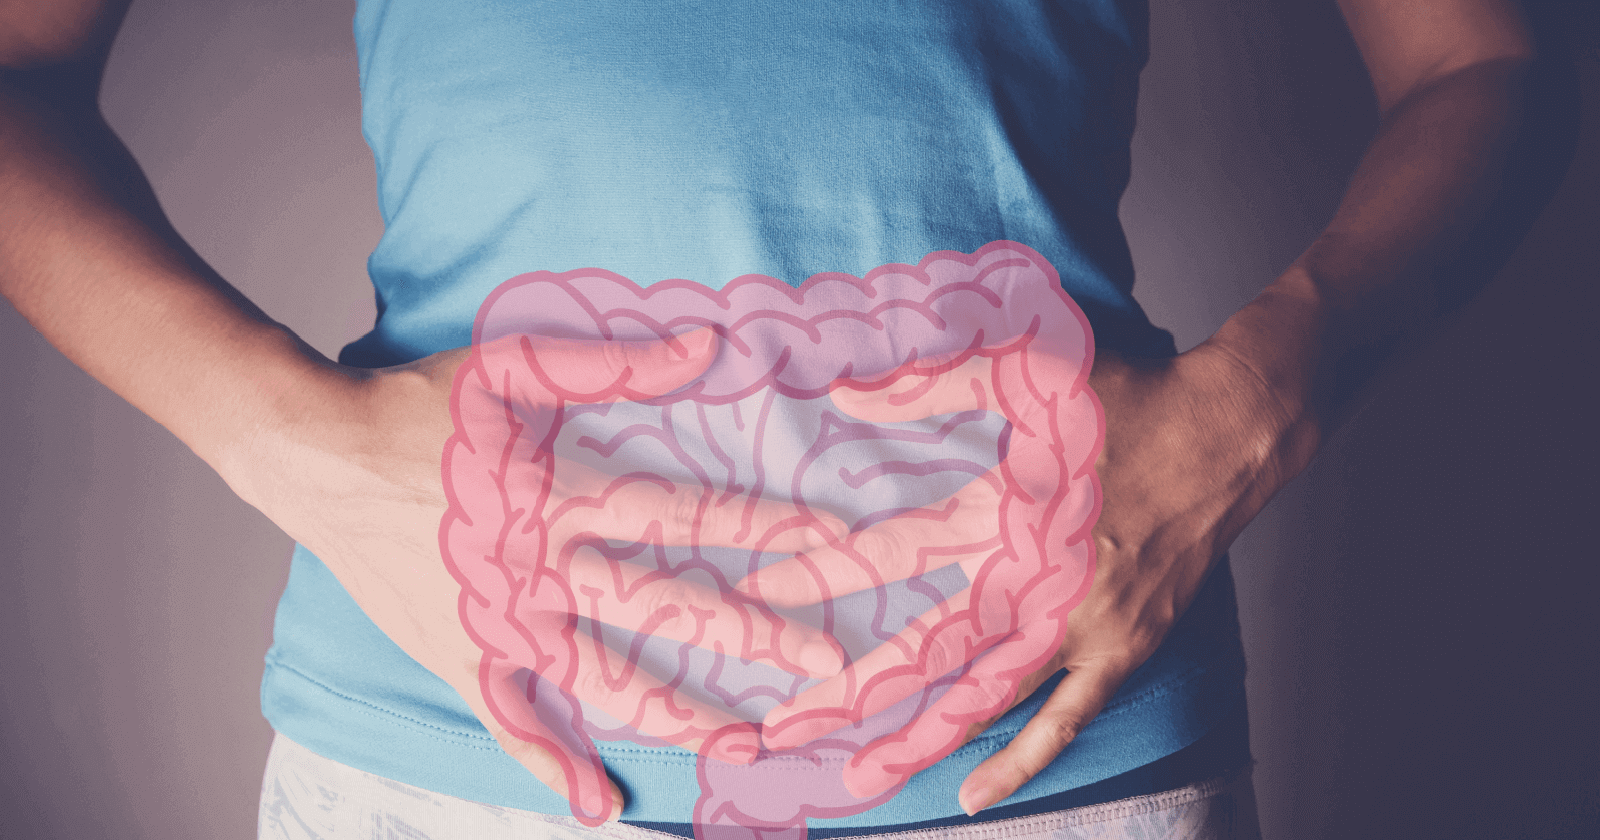 The role of probiotics and prebiotics in gut health
